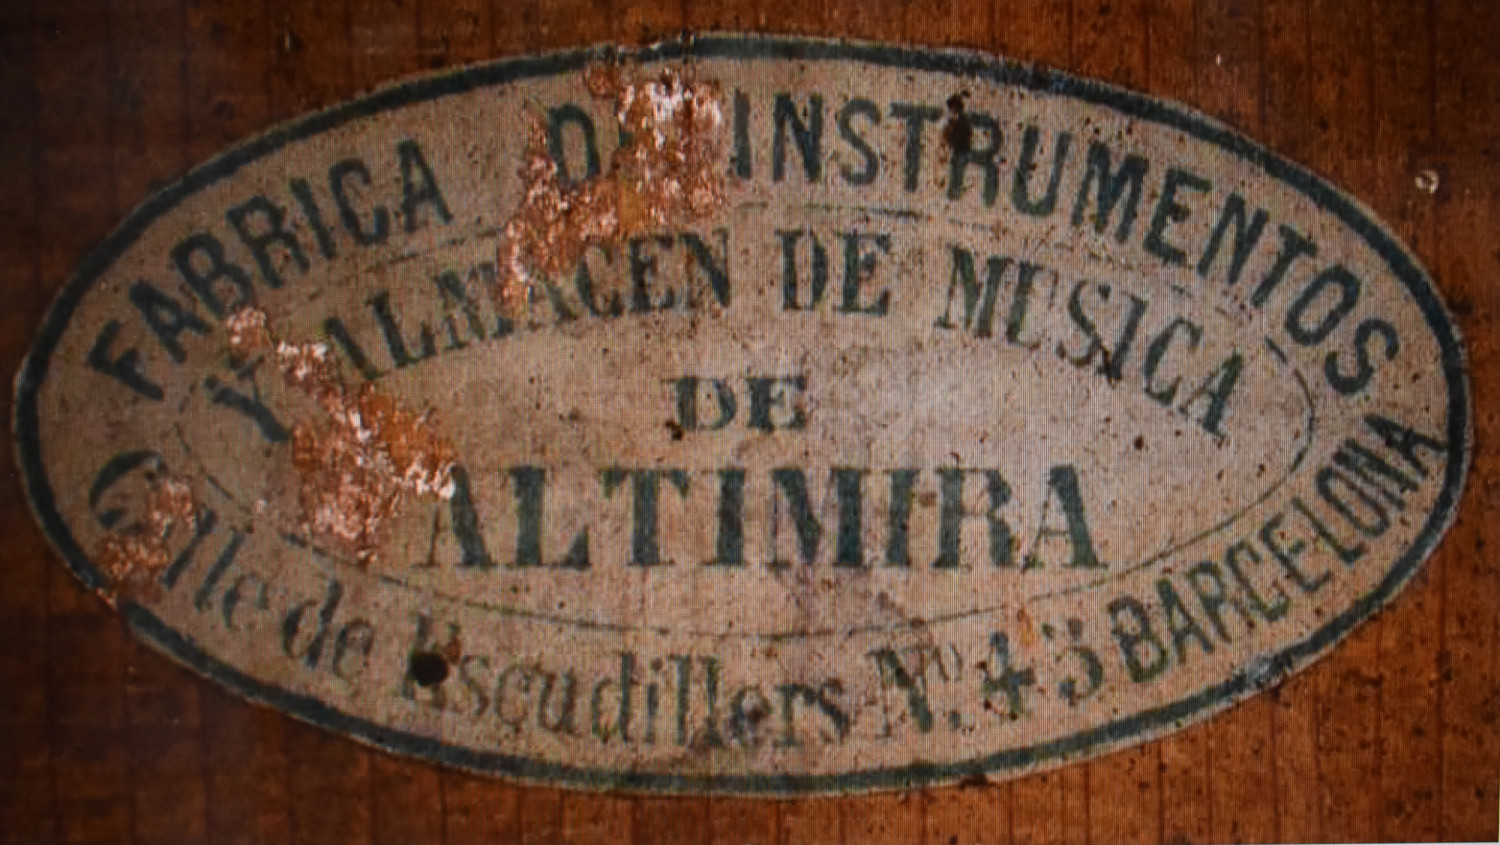 Agustin Altimira Codina (1805-1882)